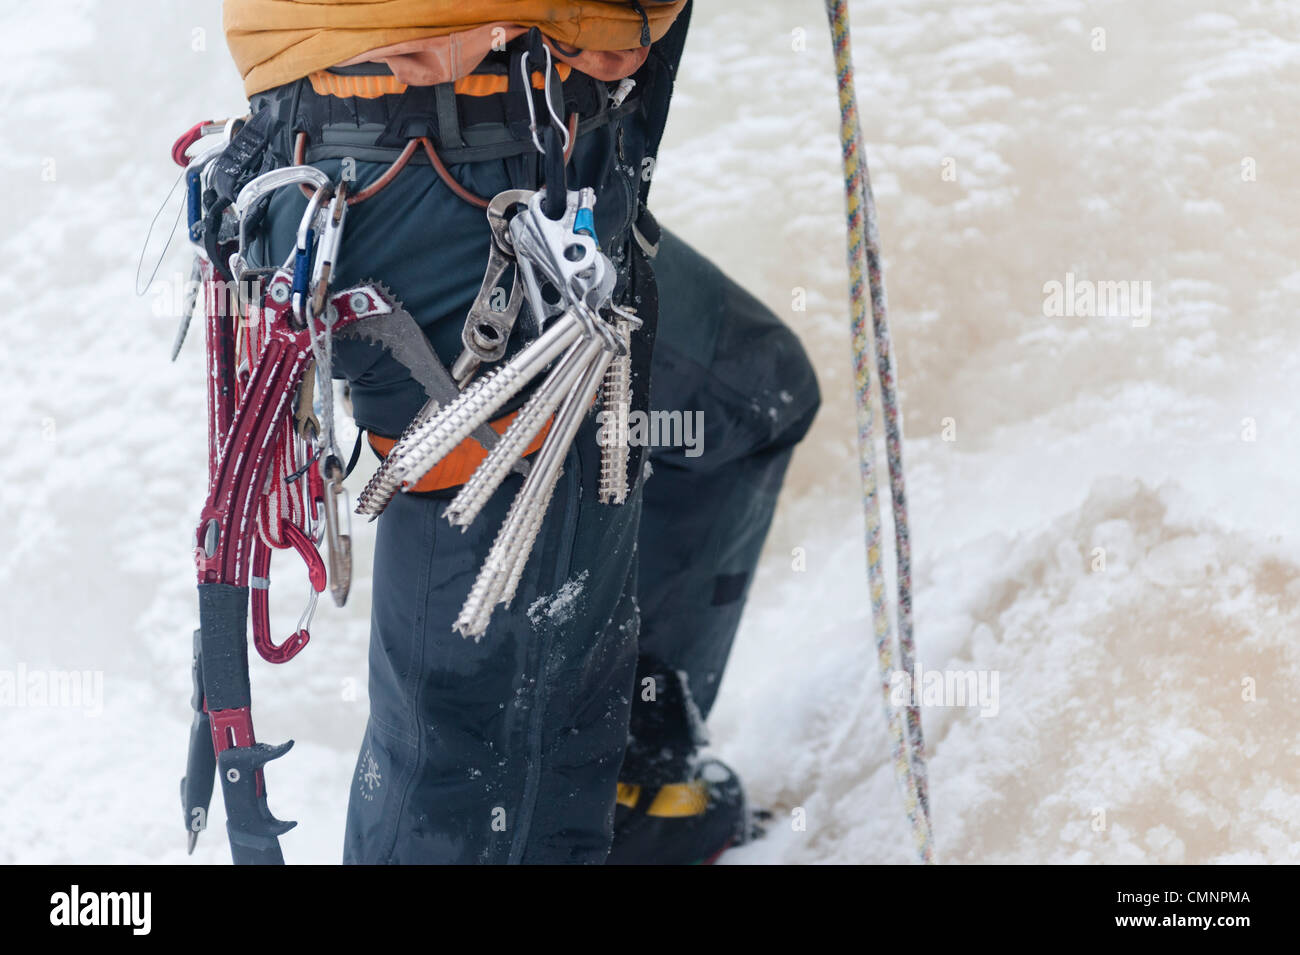 Ice climbing in Korouoma, Posio, FInnish Lapland. Stock Photo